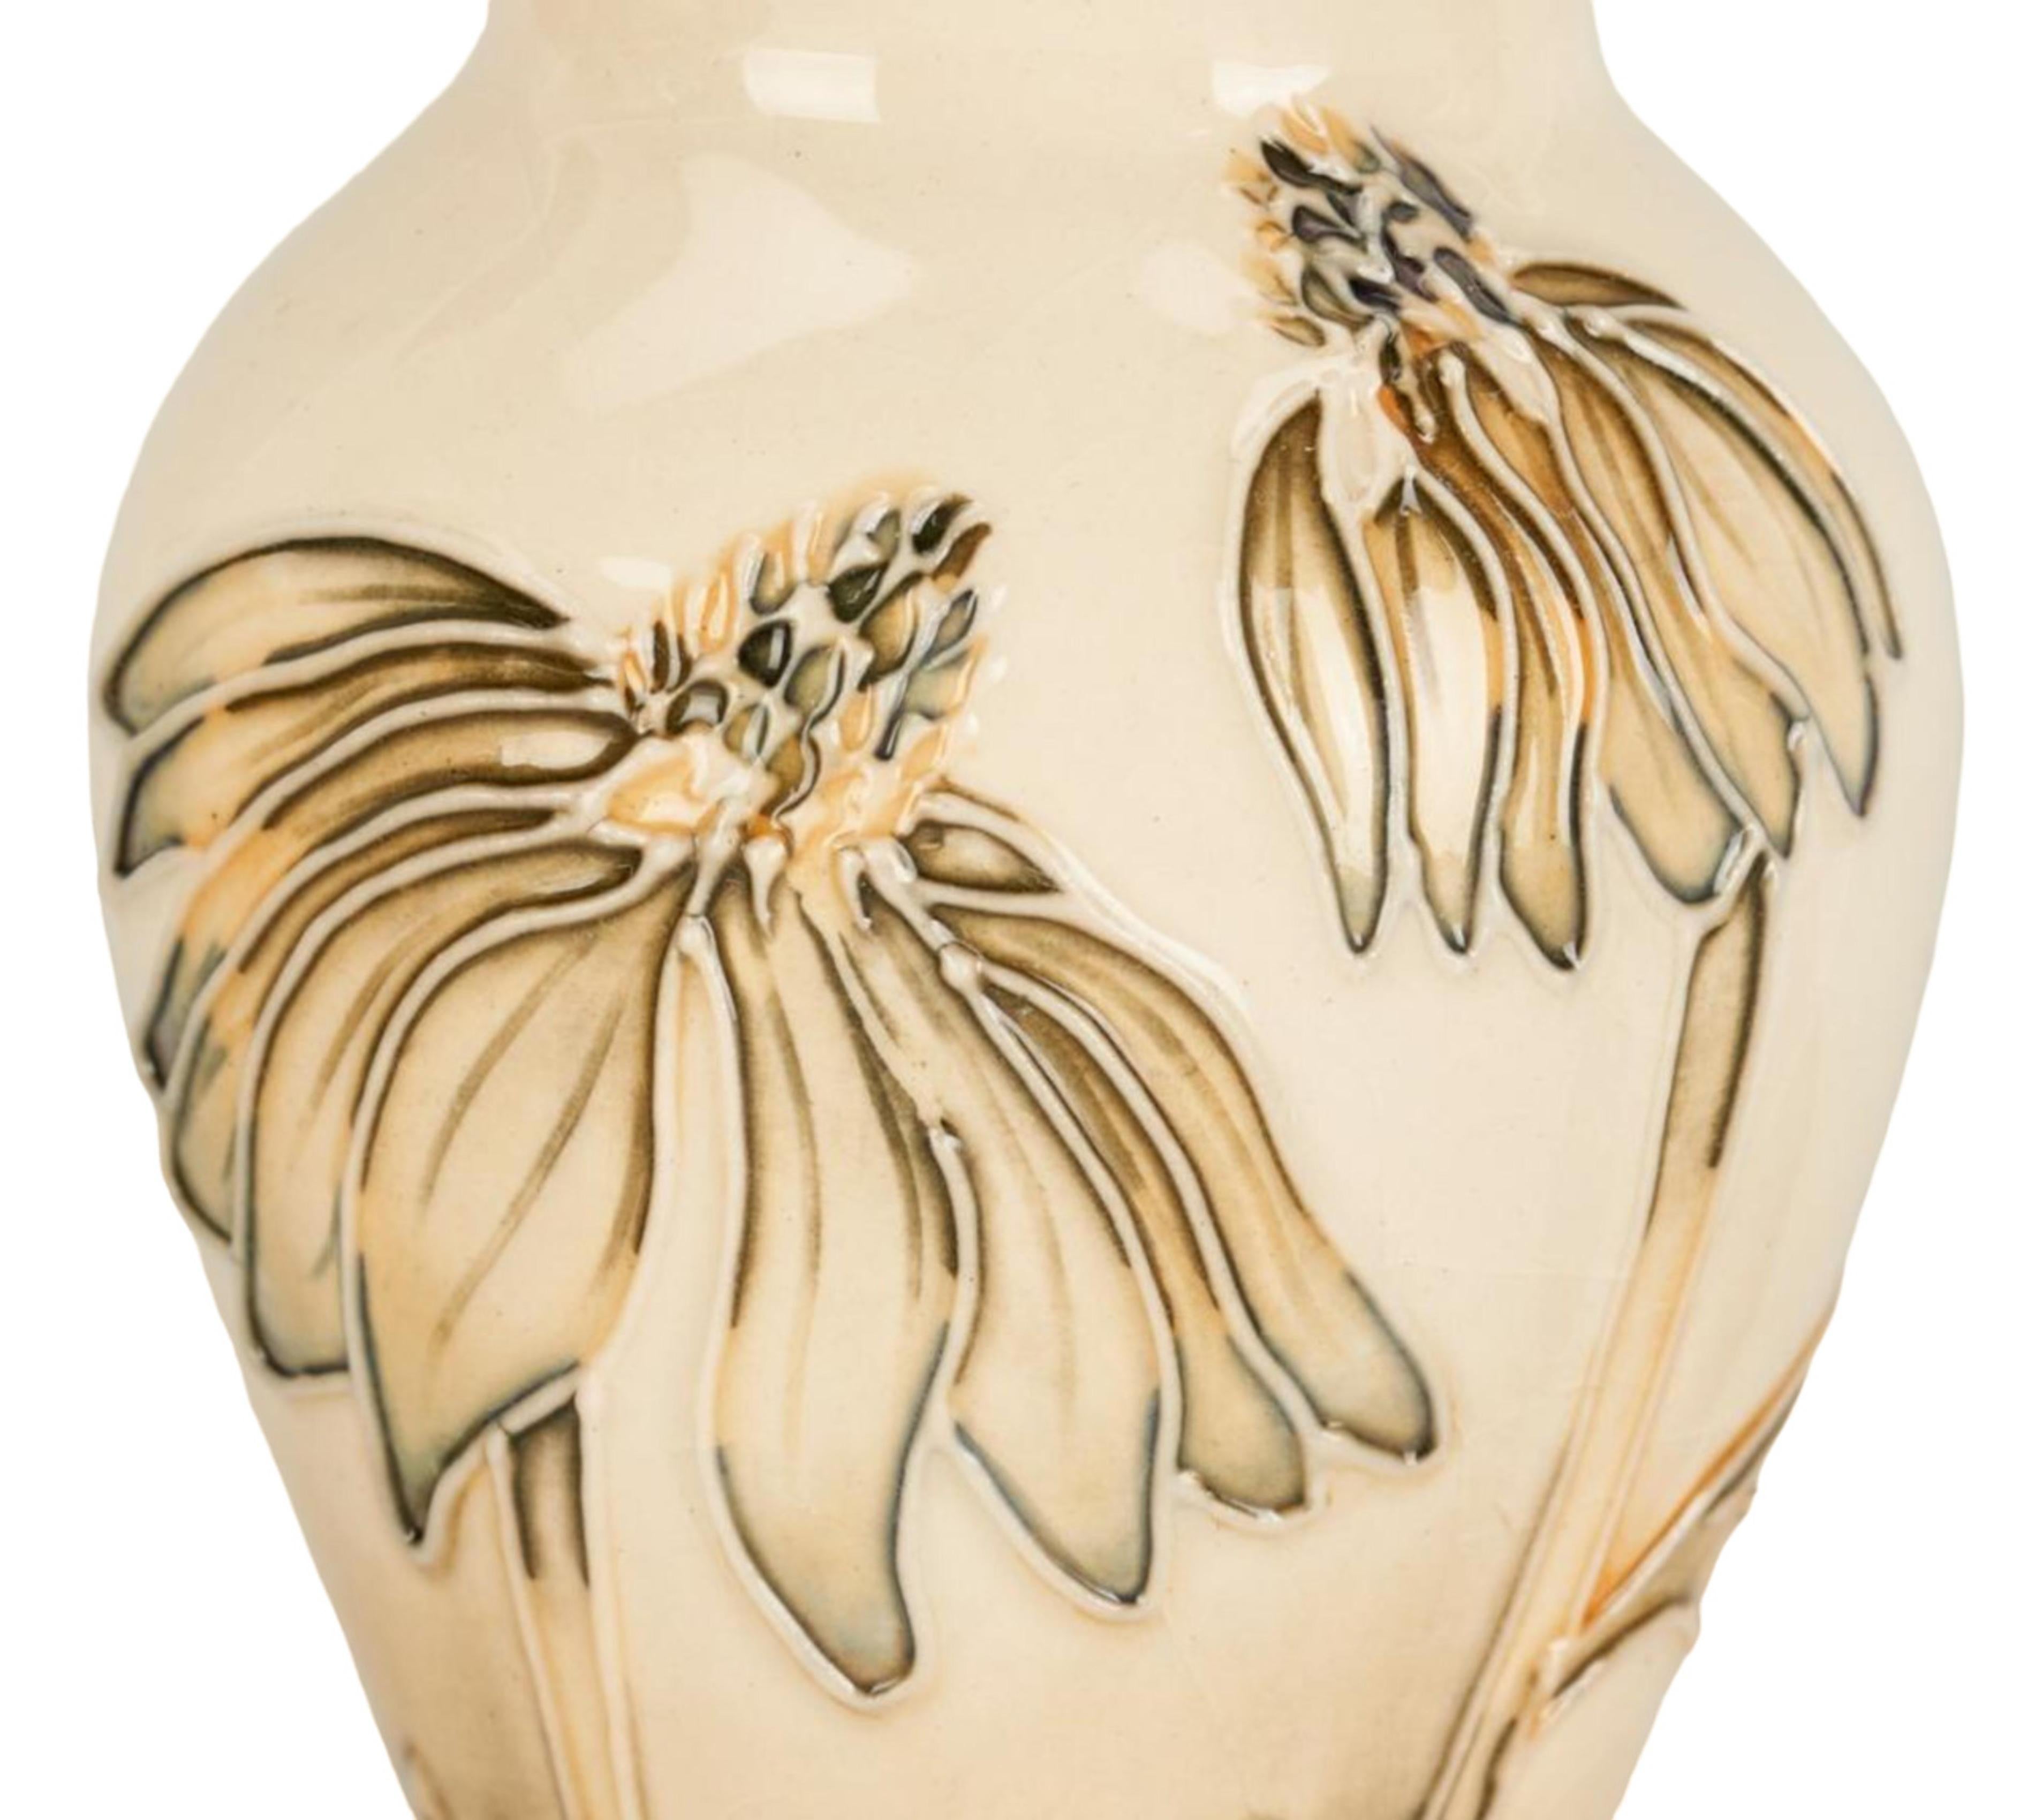 Lot de Moorcroft Pottery.
1)Vase Moorcroft Small Cornflower par Anji Davenport- Vert circulaire 